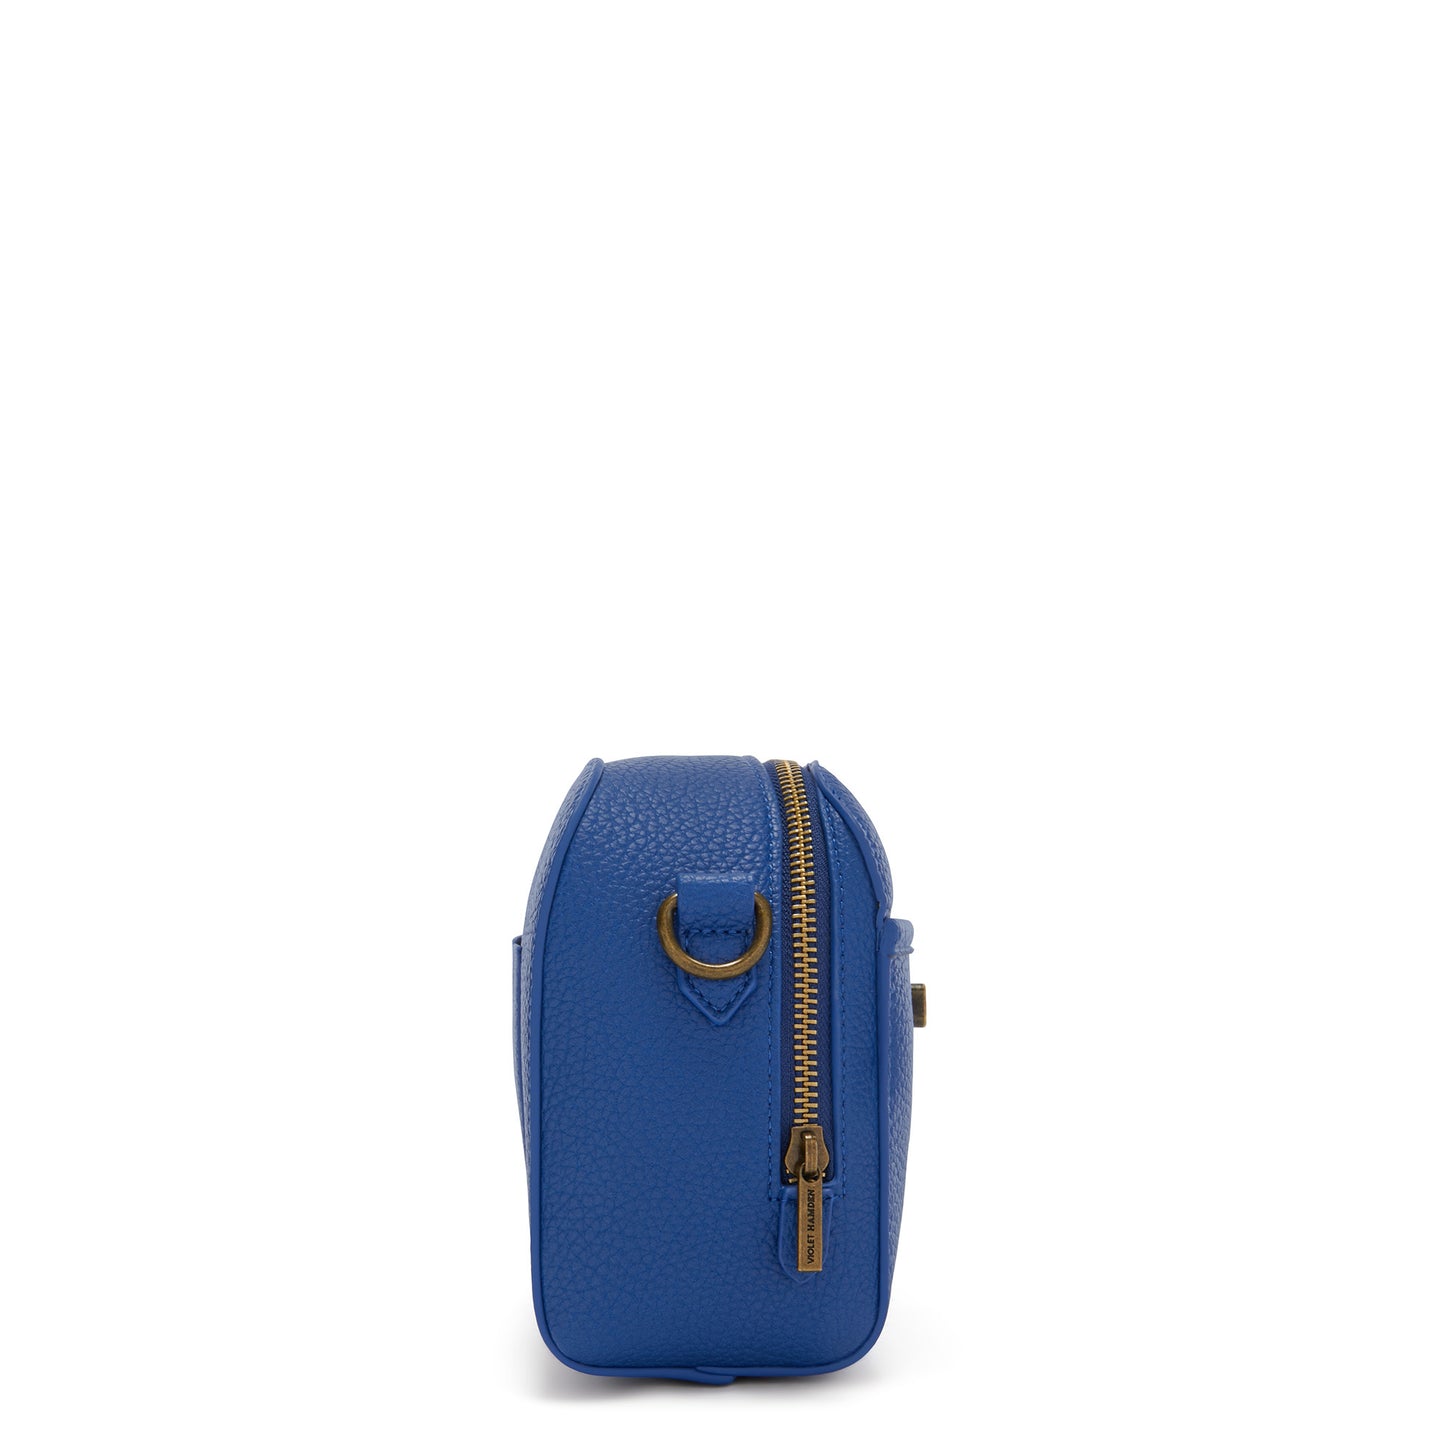 Essential Bag blaue Umhängetasche